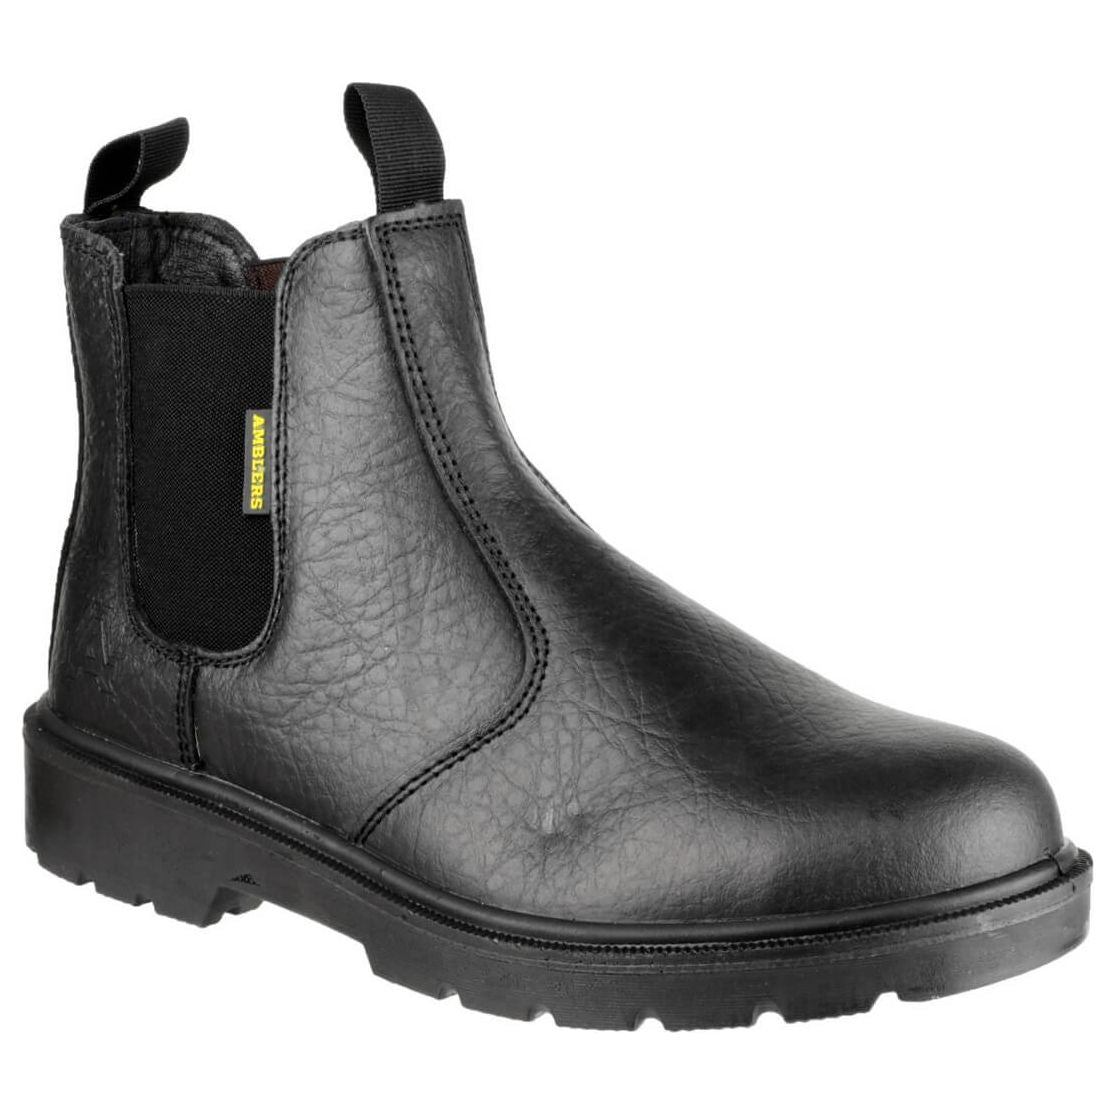 Amblers Fs116 Safety Dealer Boots Mens - workweargurus.com